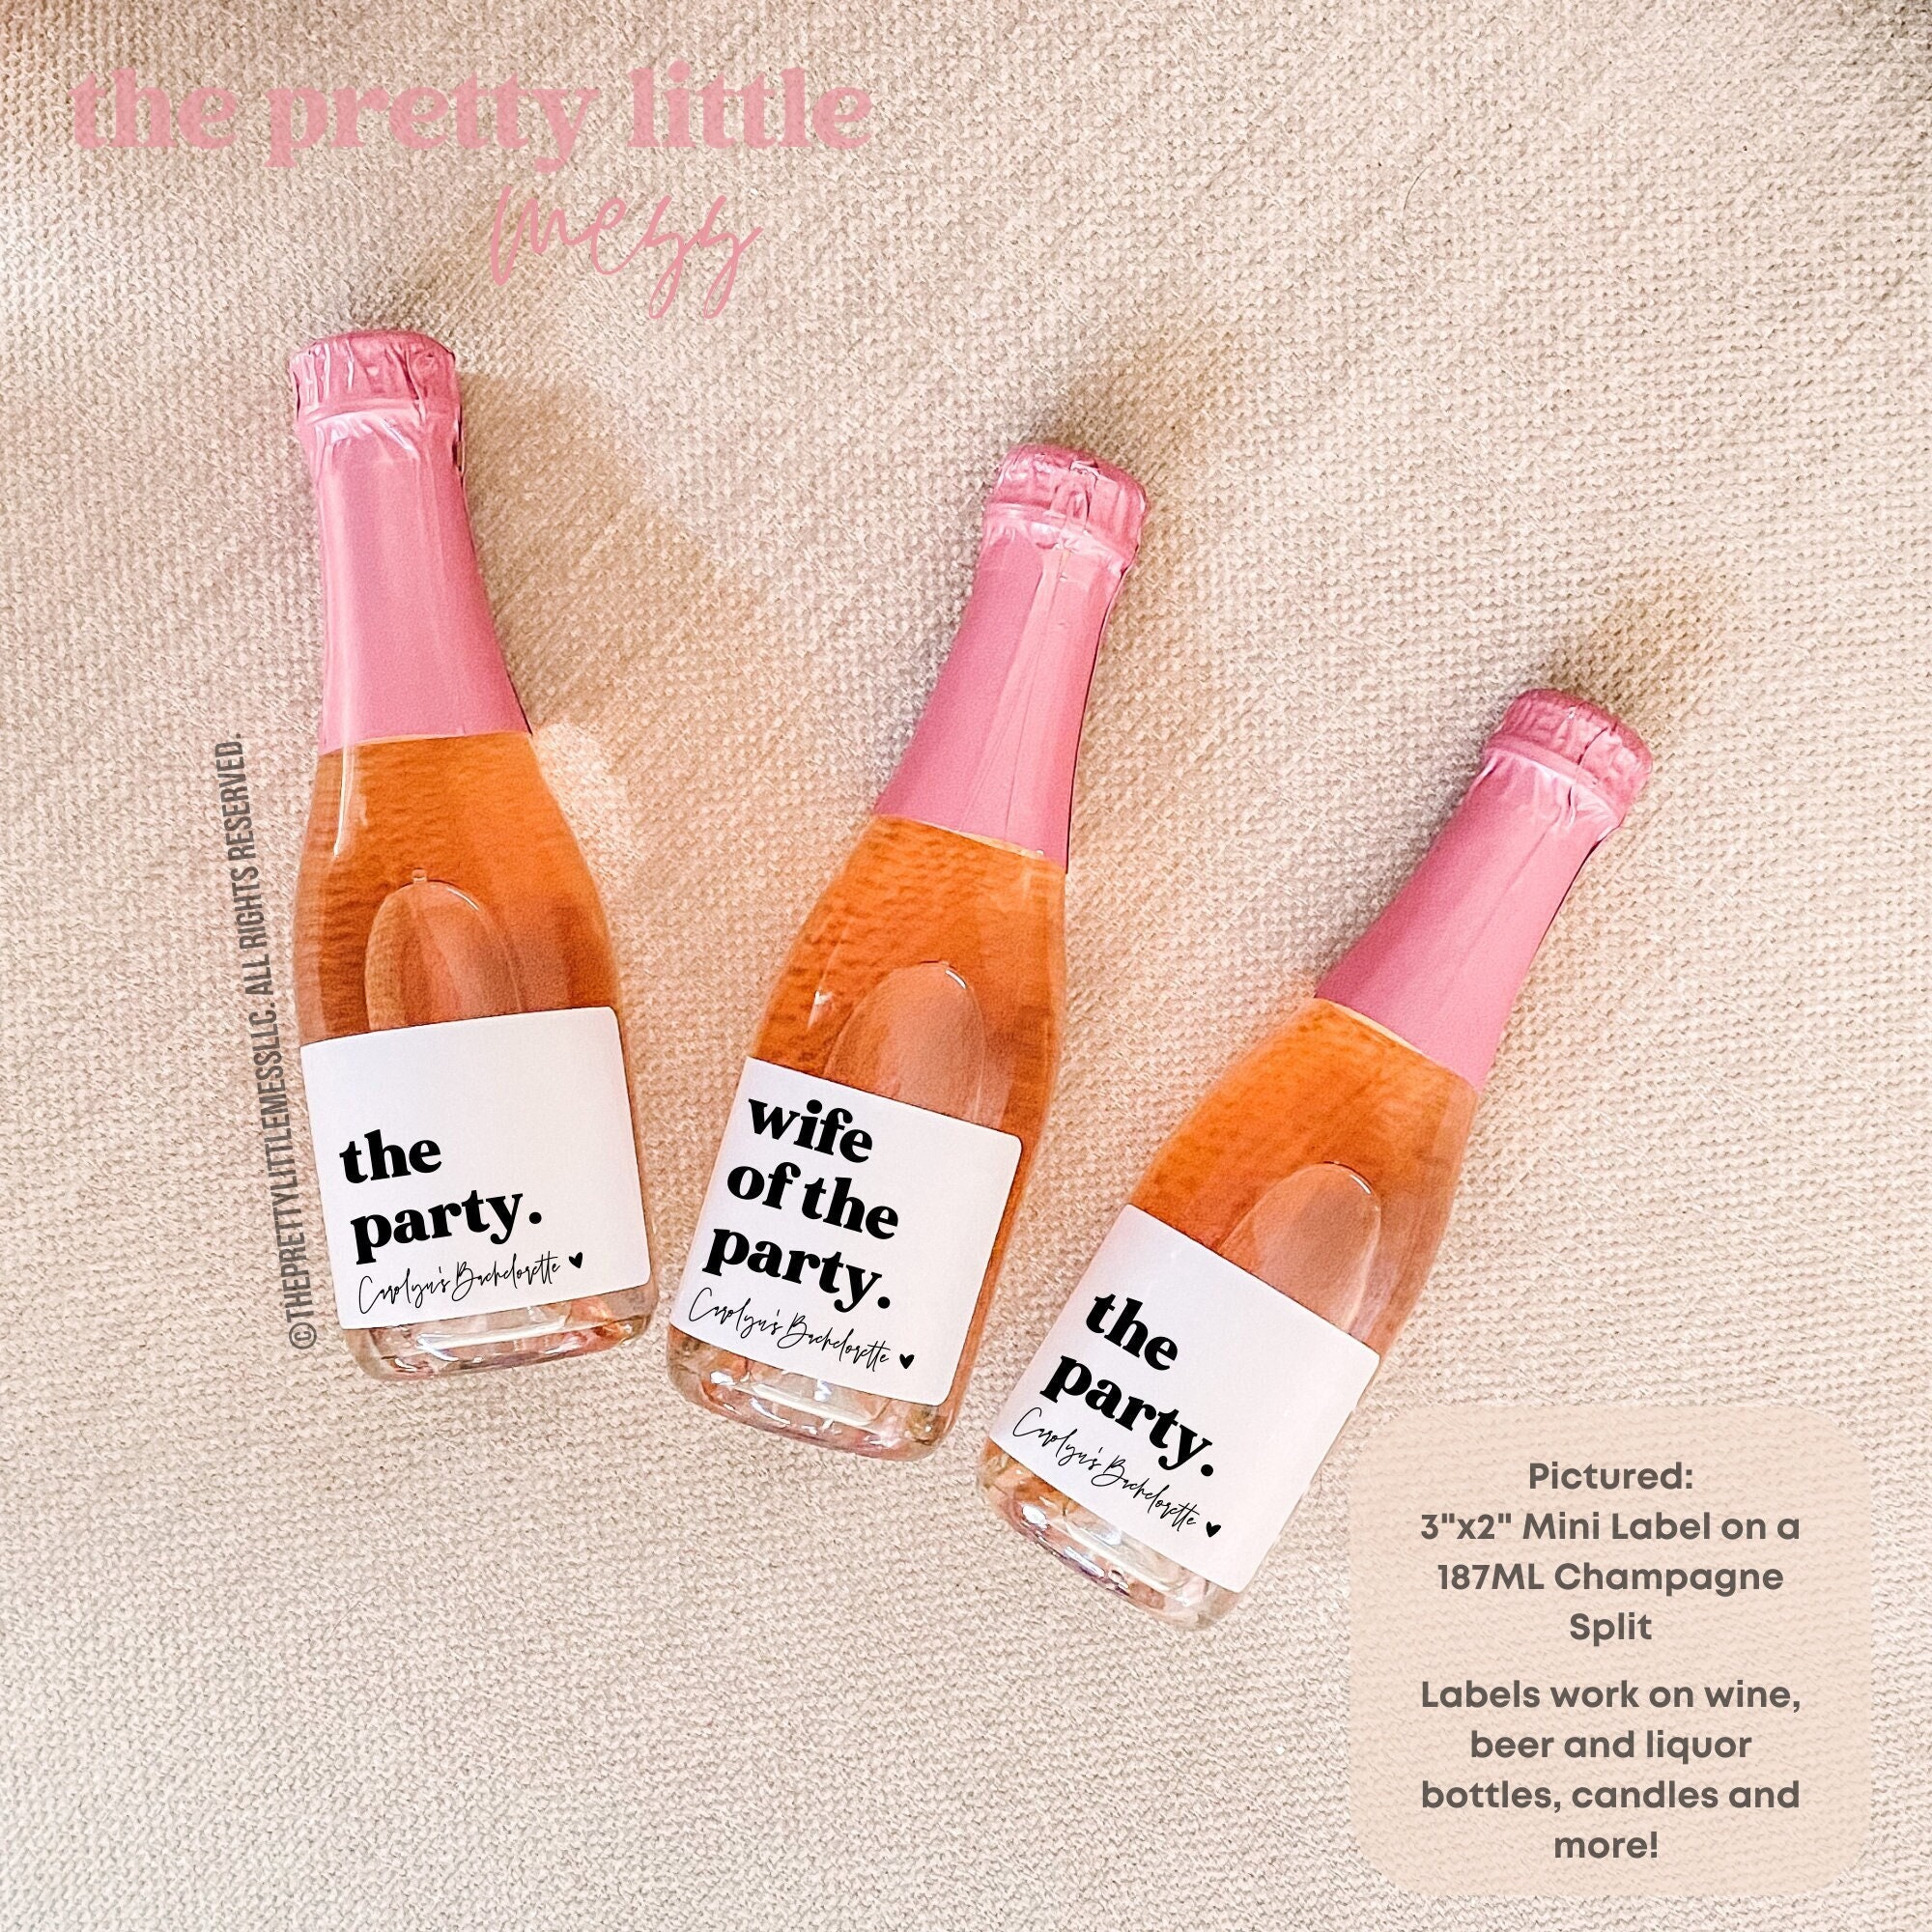 Sutter Home's Mini Bottle Breakdown - Learn More